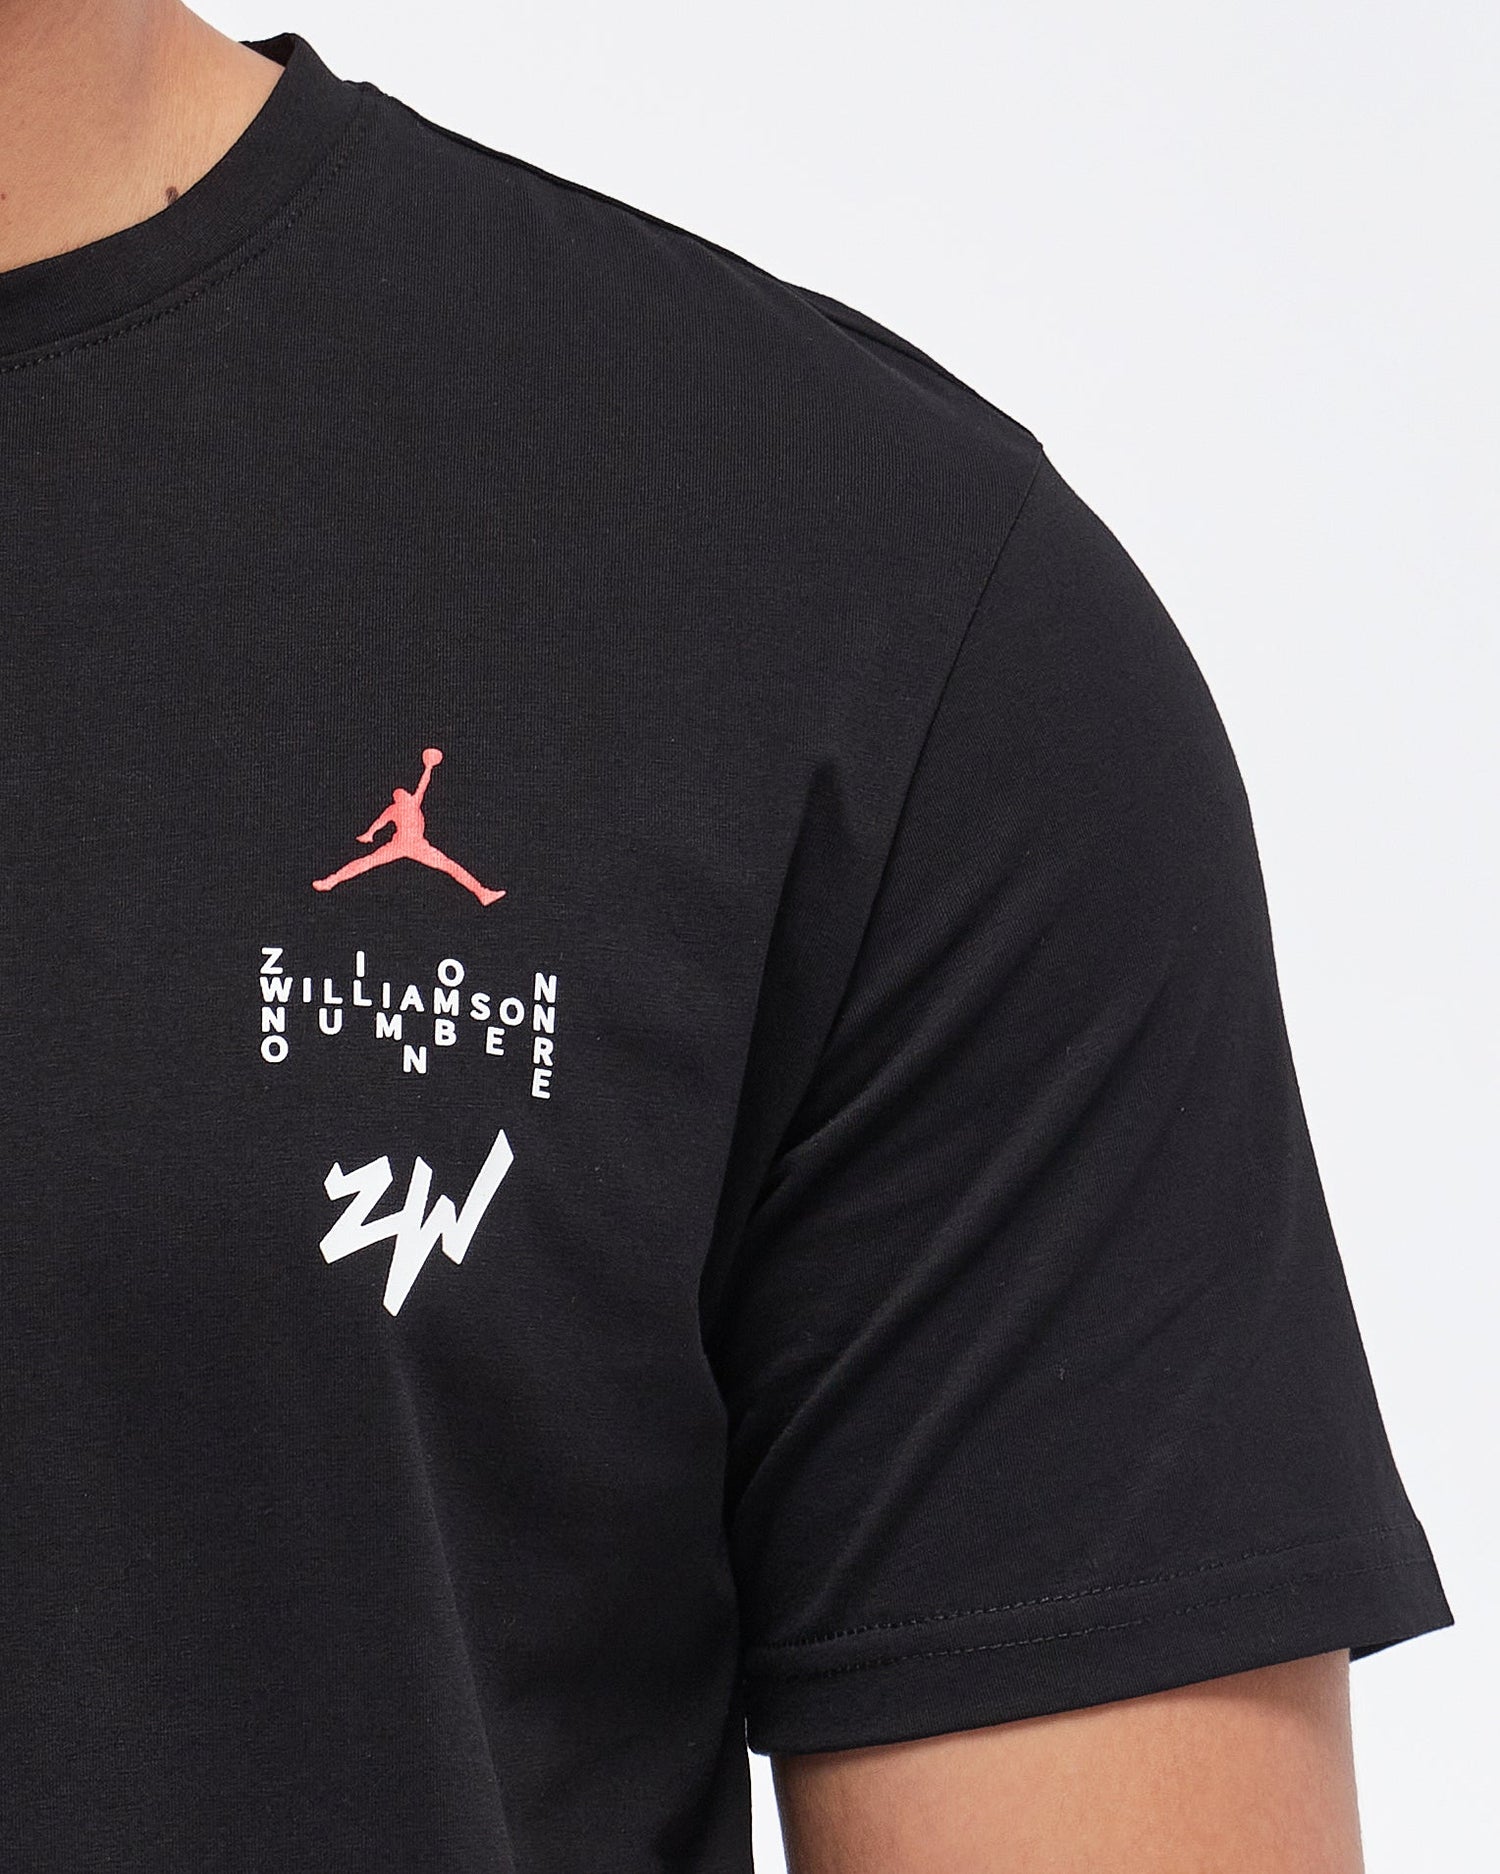 MOI OUTFIT-ZW Jumpman Printed Men T-Shirt 13.90